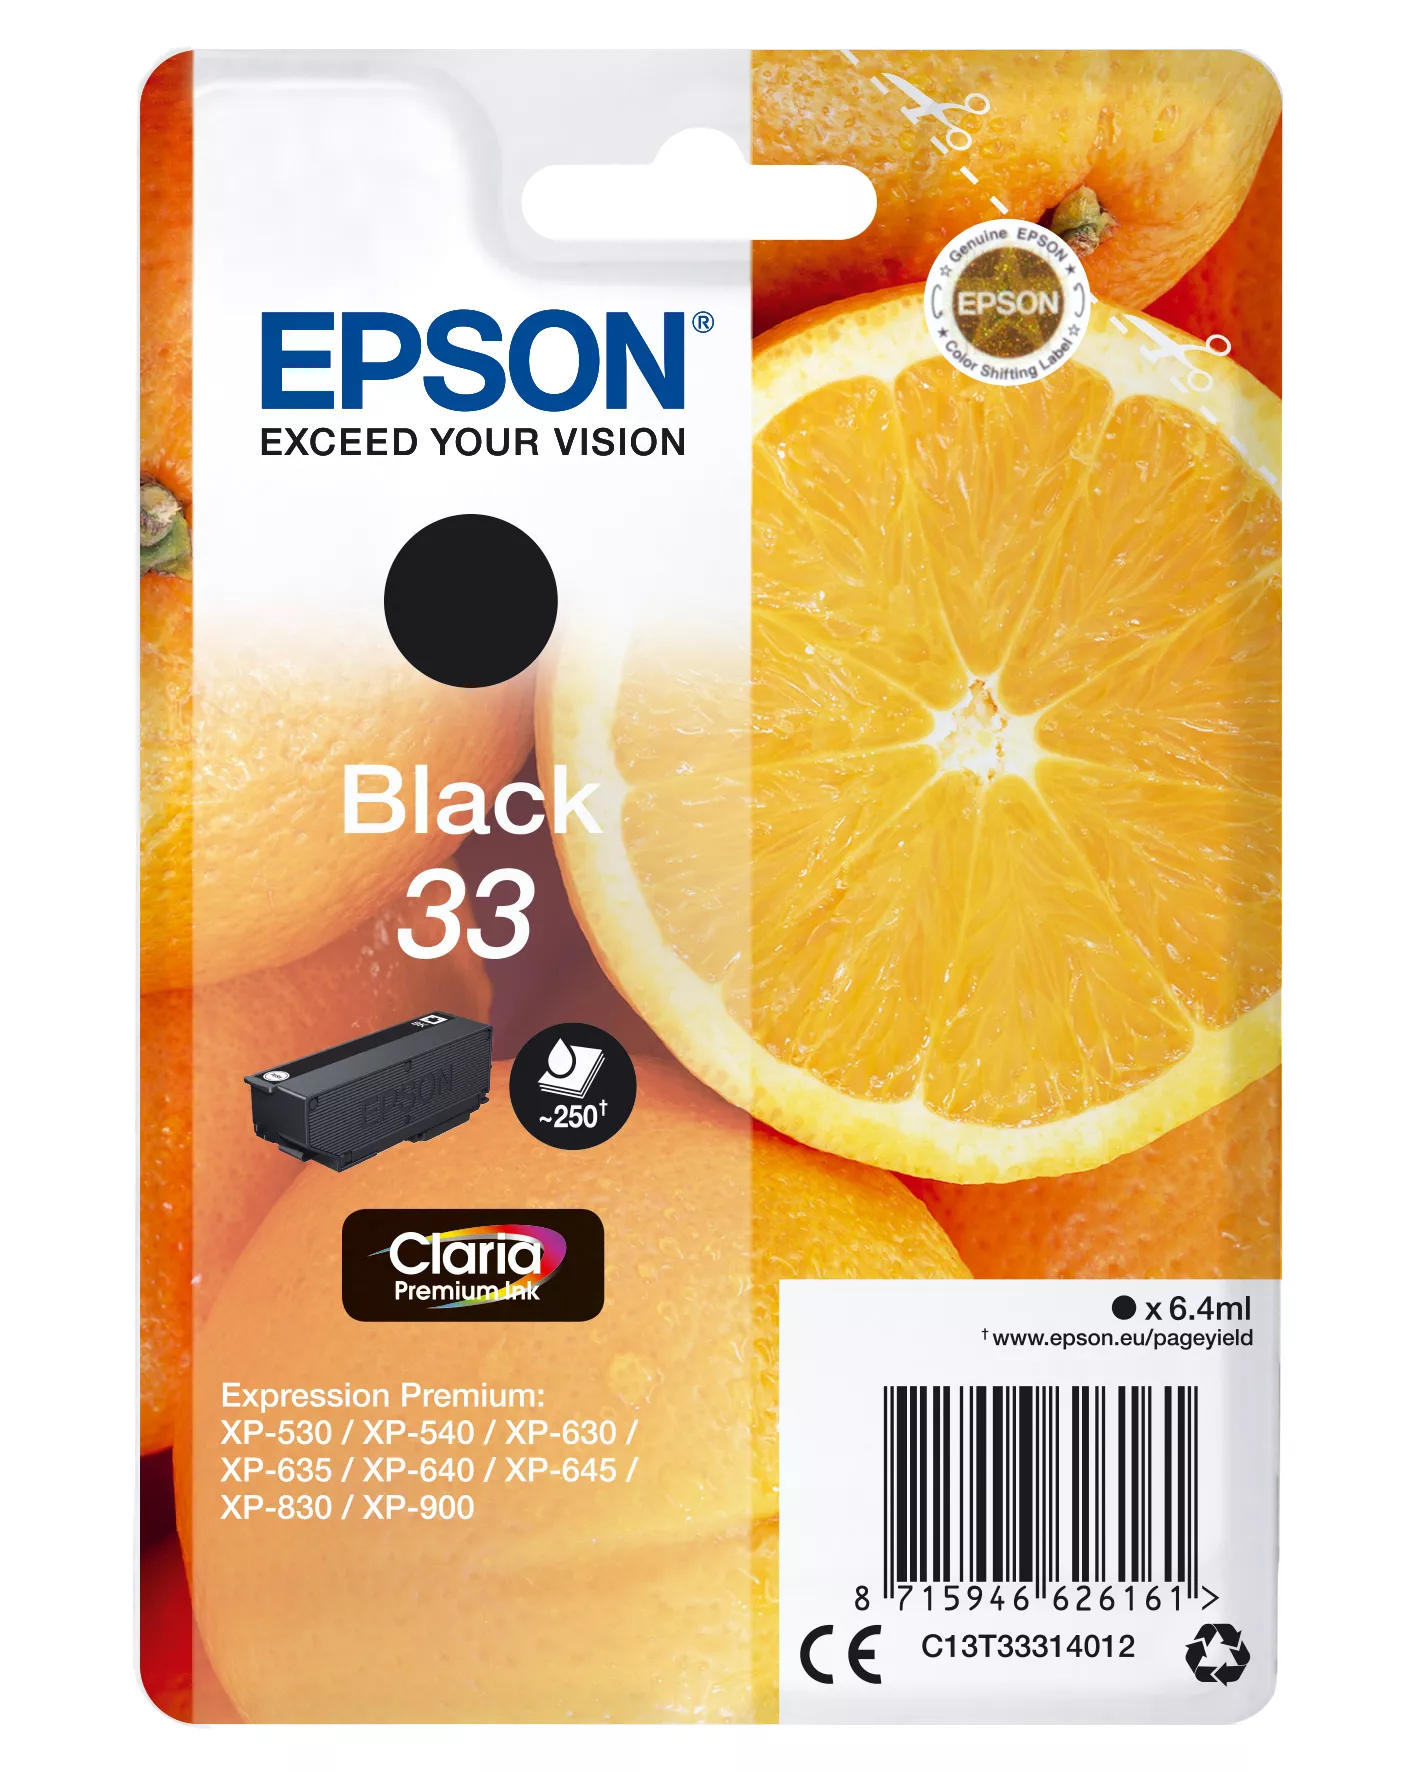 Achat EPSON Cartouche Oranges Encre Claria Premium Noir - 8715946626178